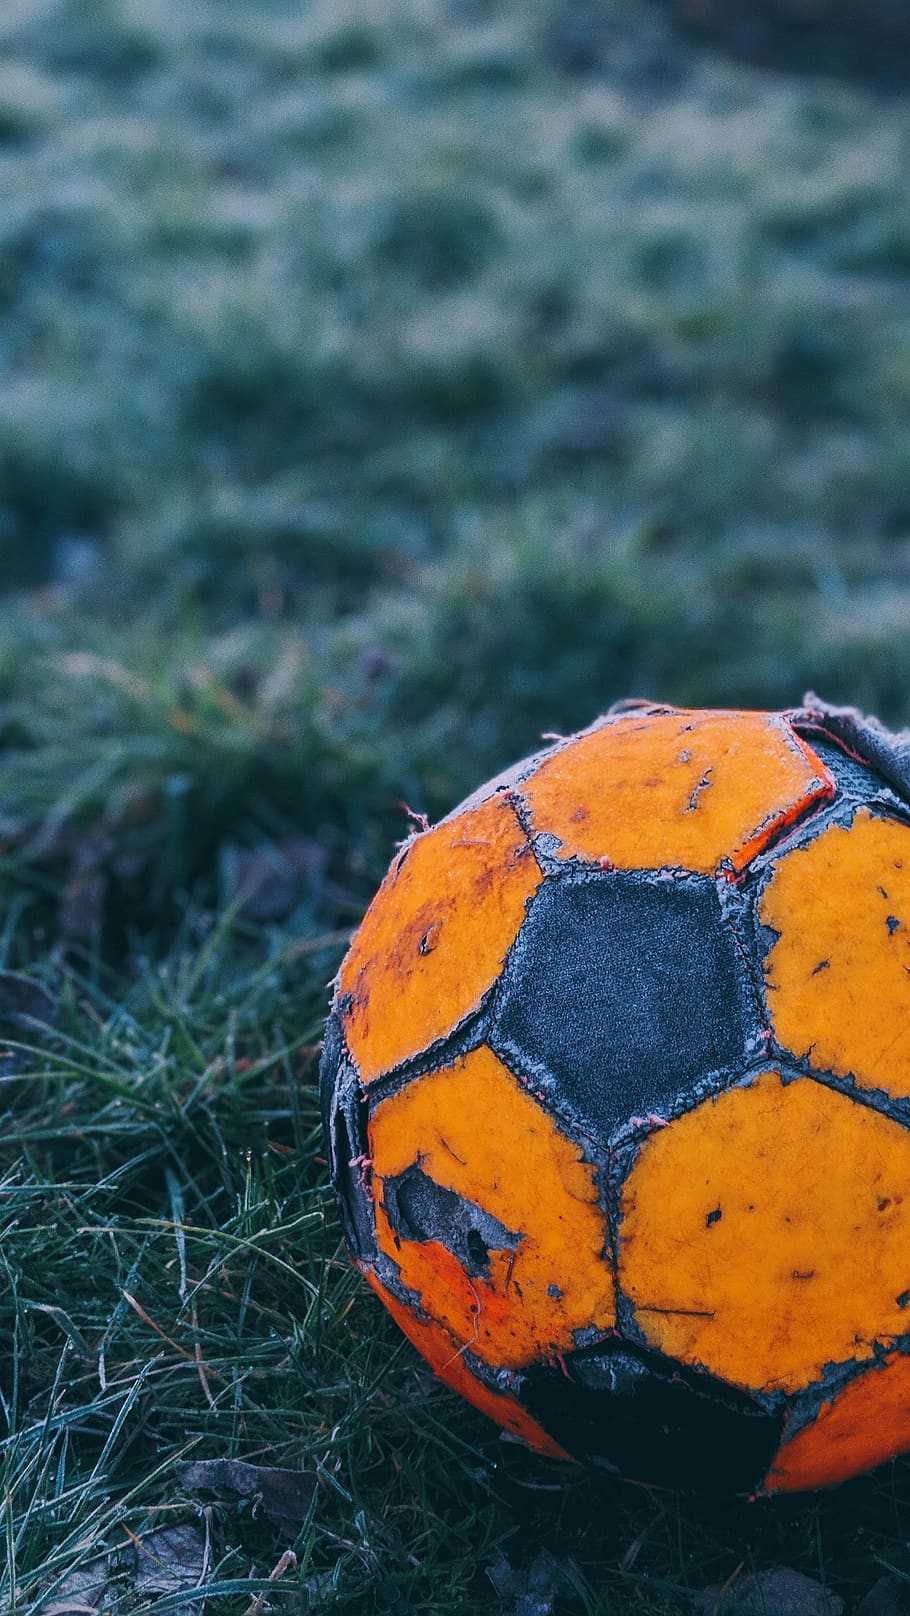 HD wallpaper: orange and black soccer ball on the field, sphere, grass, football - Wallpaper Flare